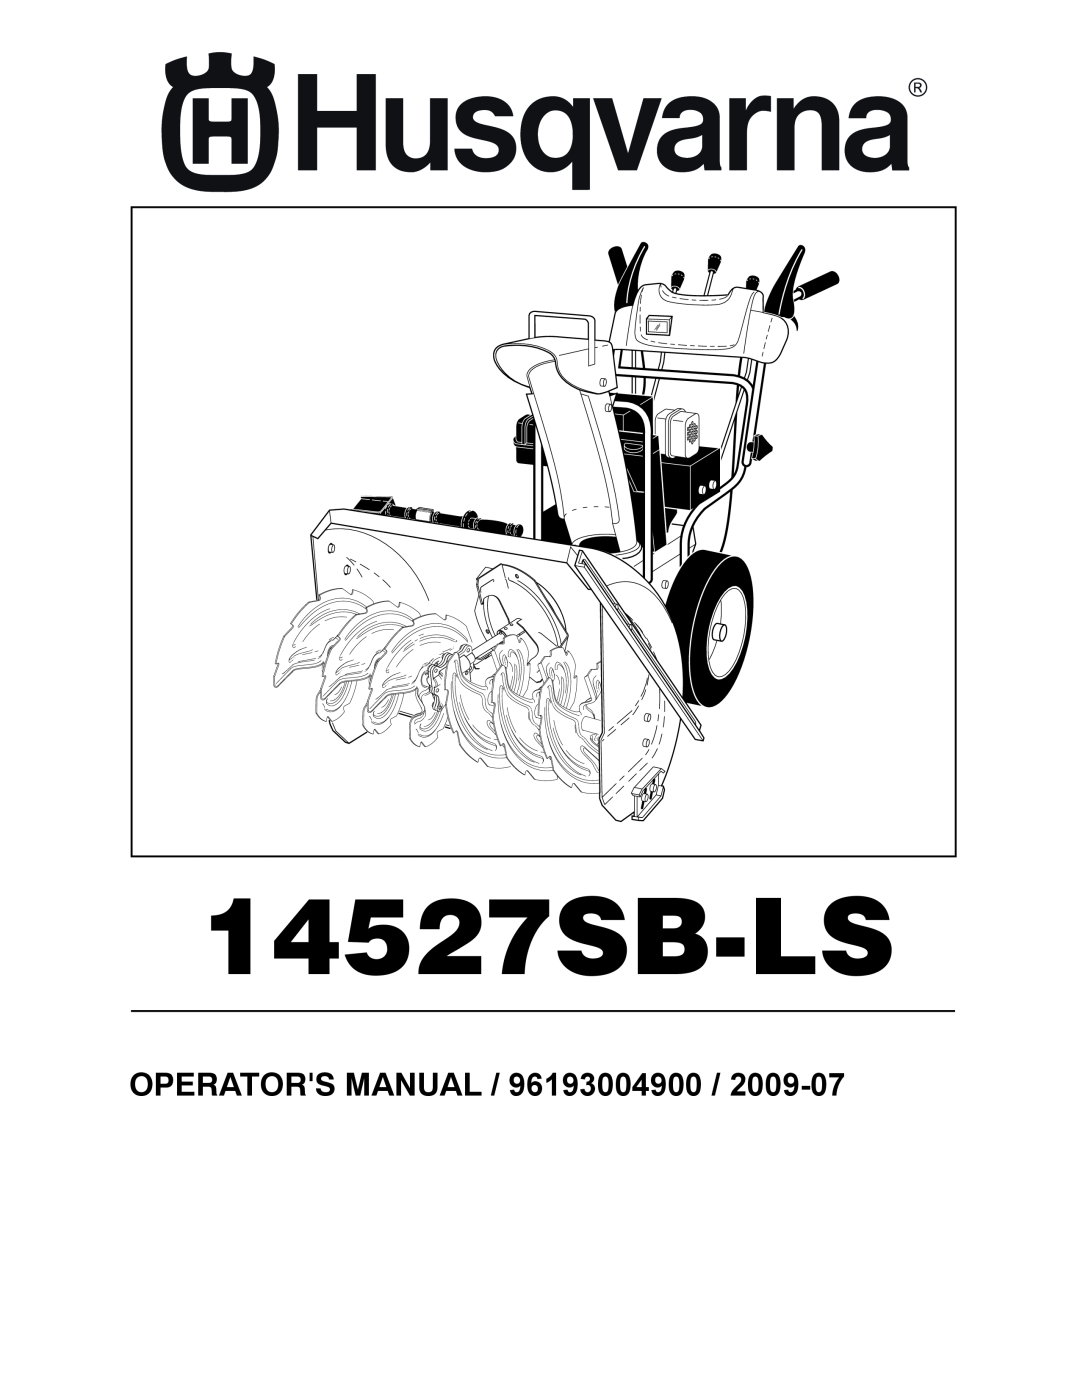 Husqvarna 14527SB-LS manual Operators Manual 